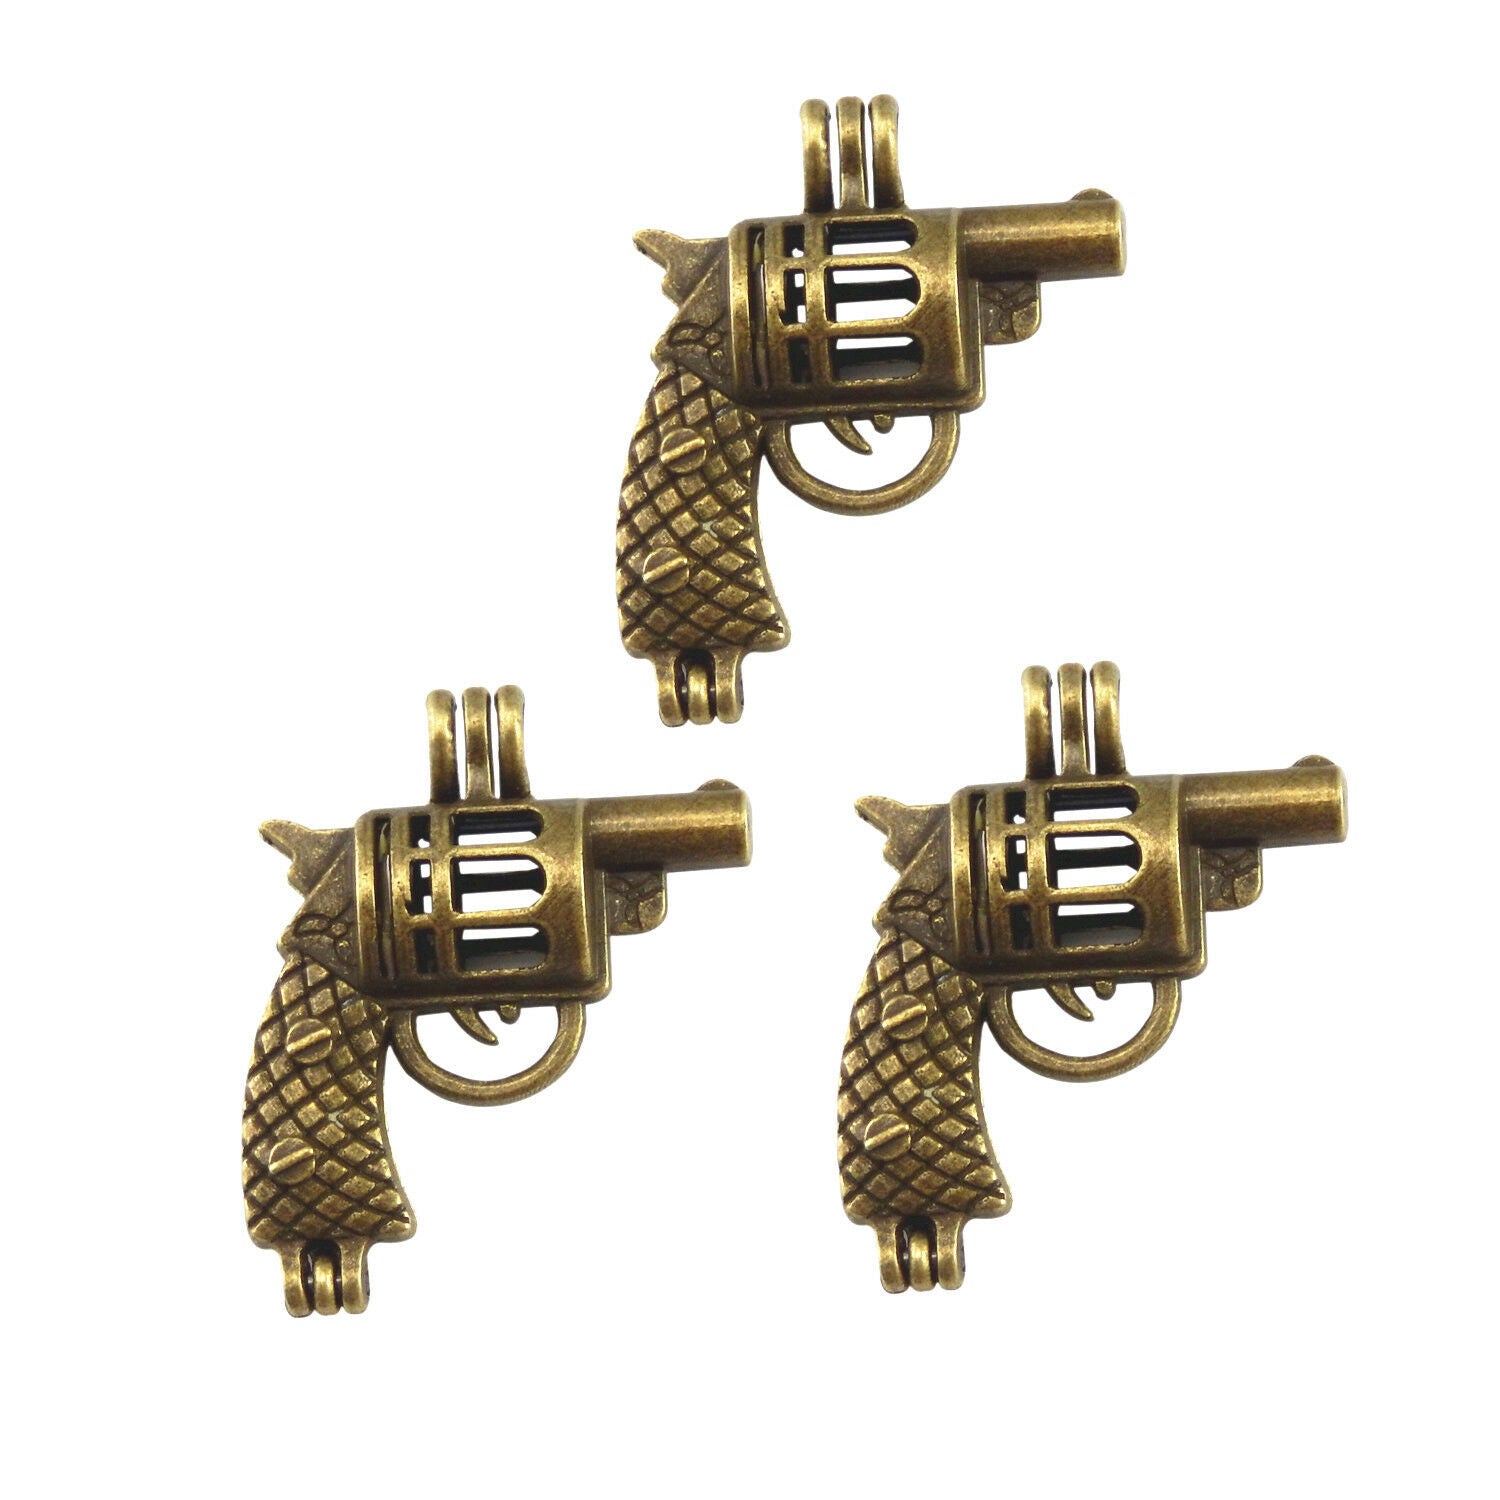 1 Piece Antiqued Bronze Color Revolver Shaped Charm Locket Pendant 29x23x10 mm